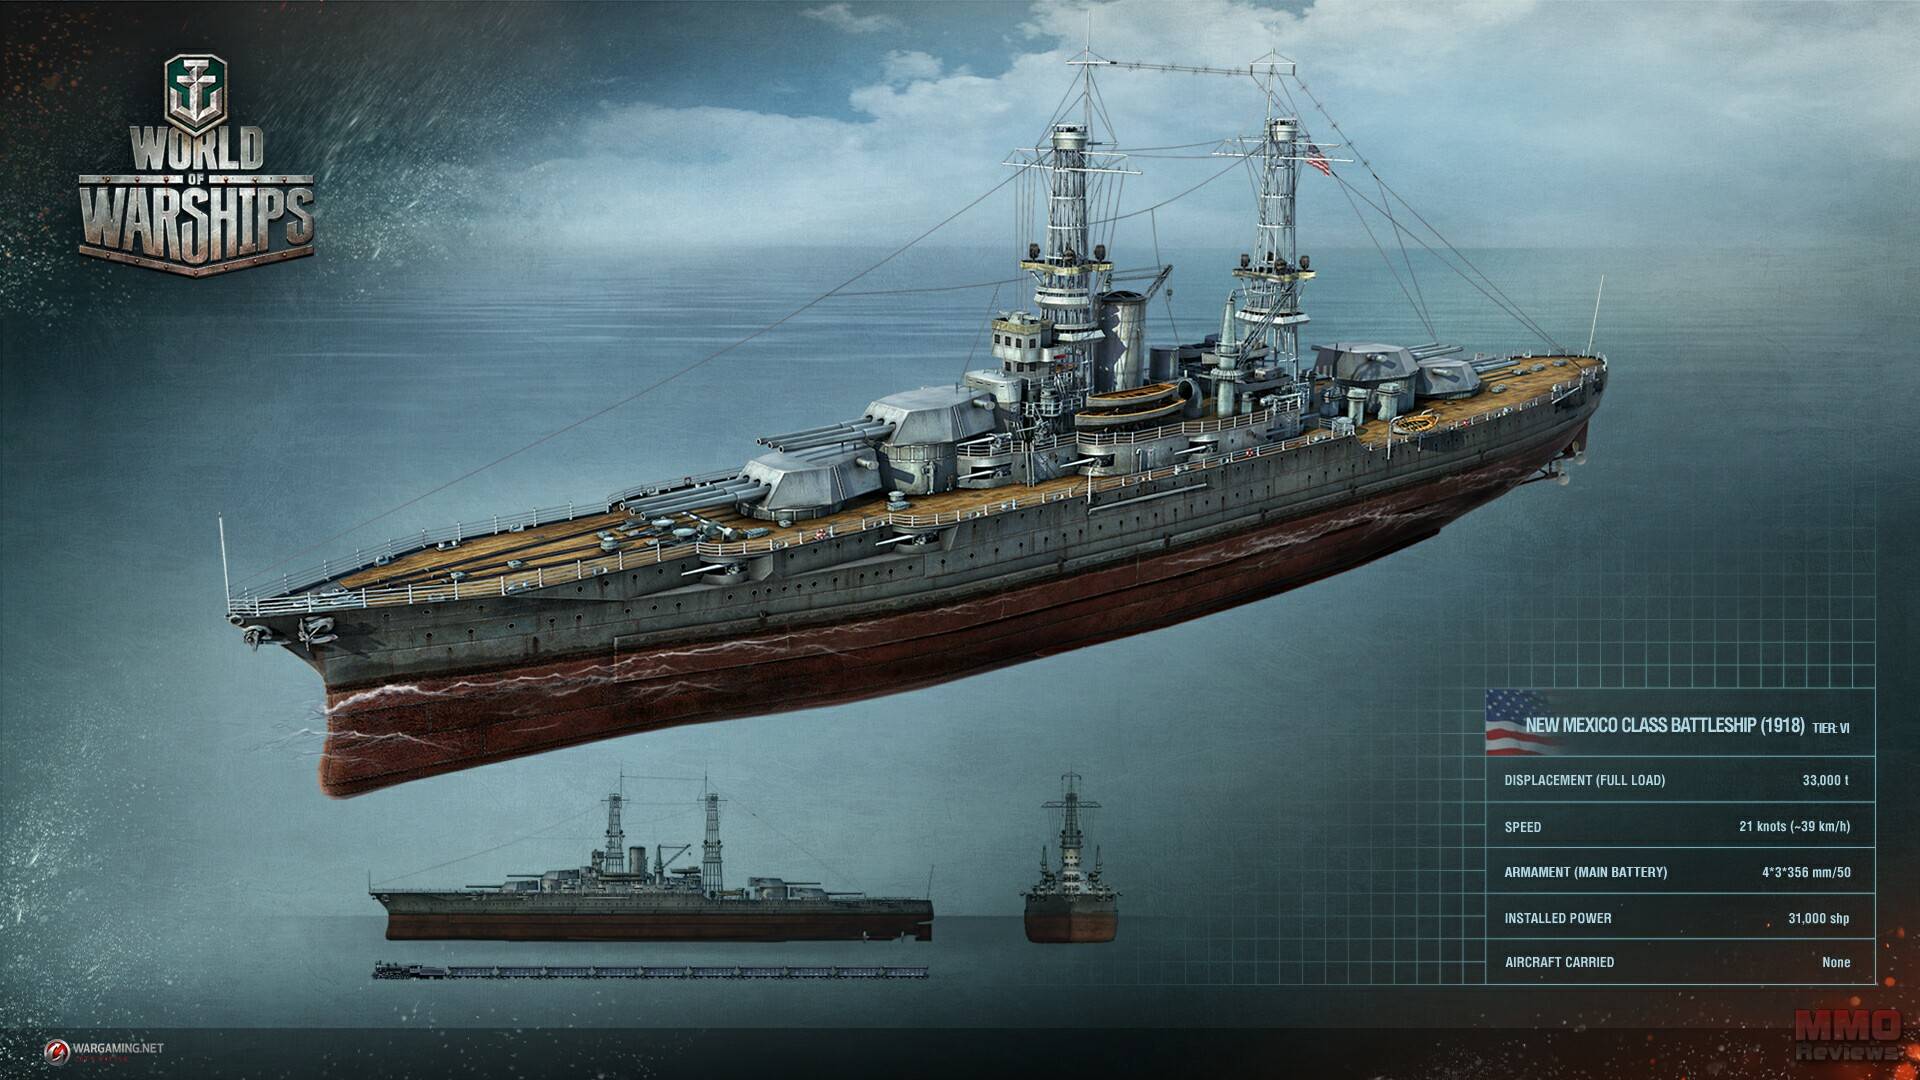 Ww2 Battleship Wallpaper Reckon with during wwii